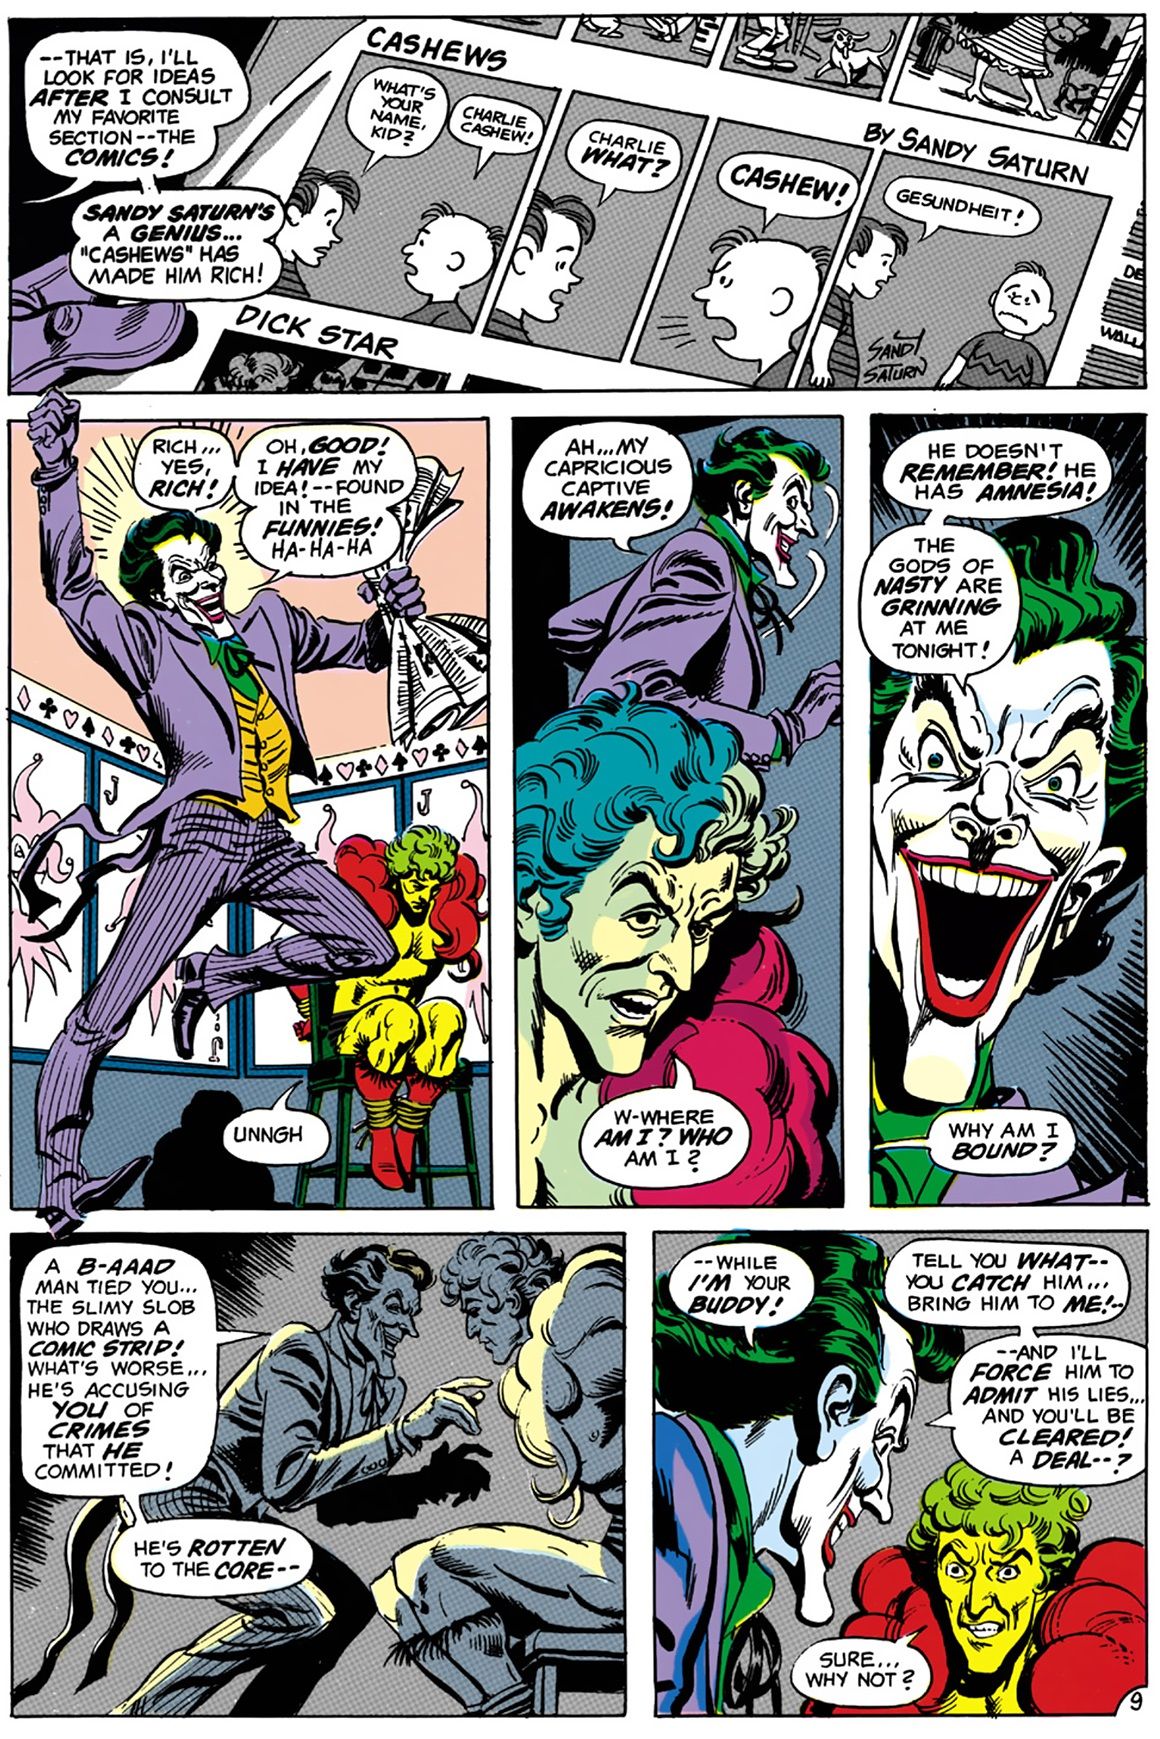 El Joker le pide al Creeper que rapte a Charles Schulz